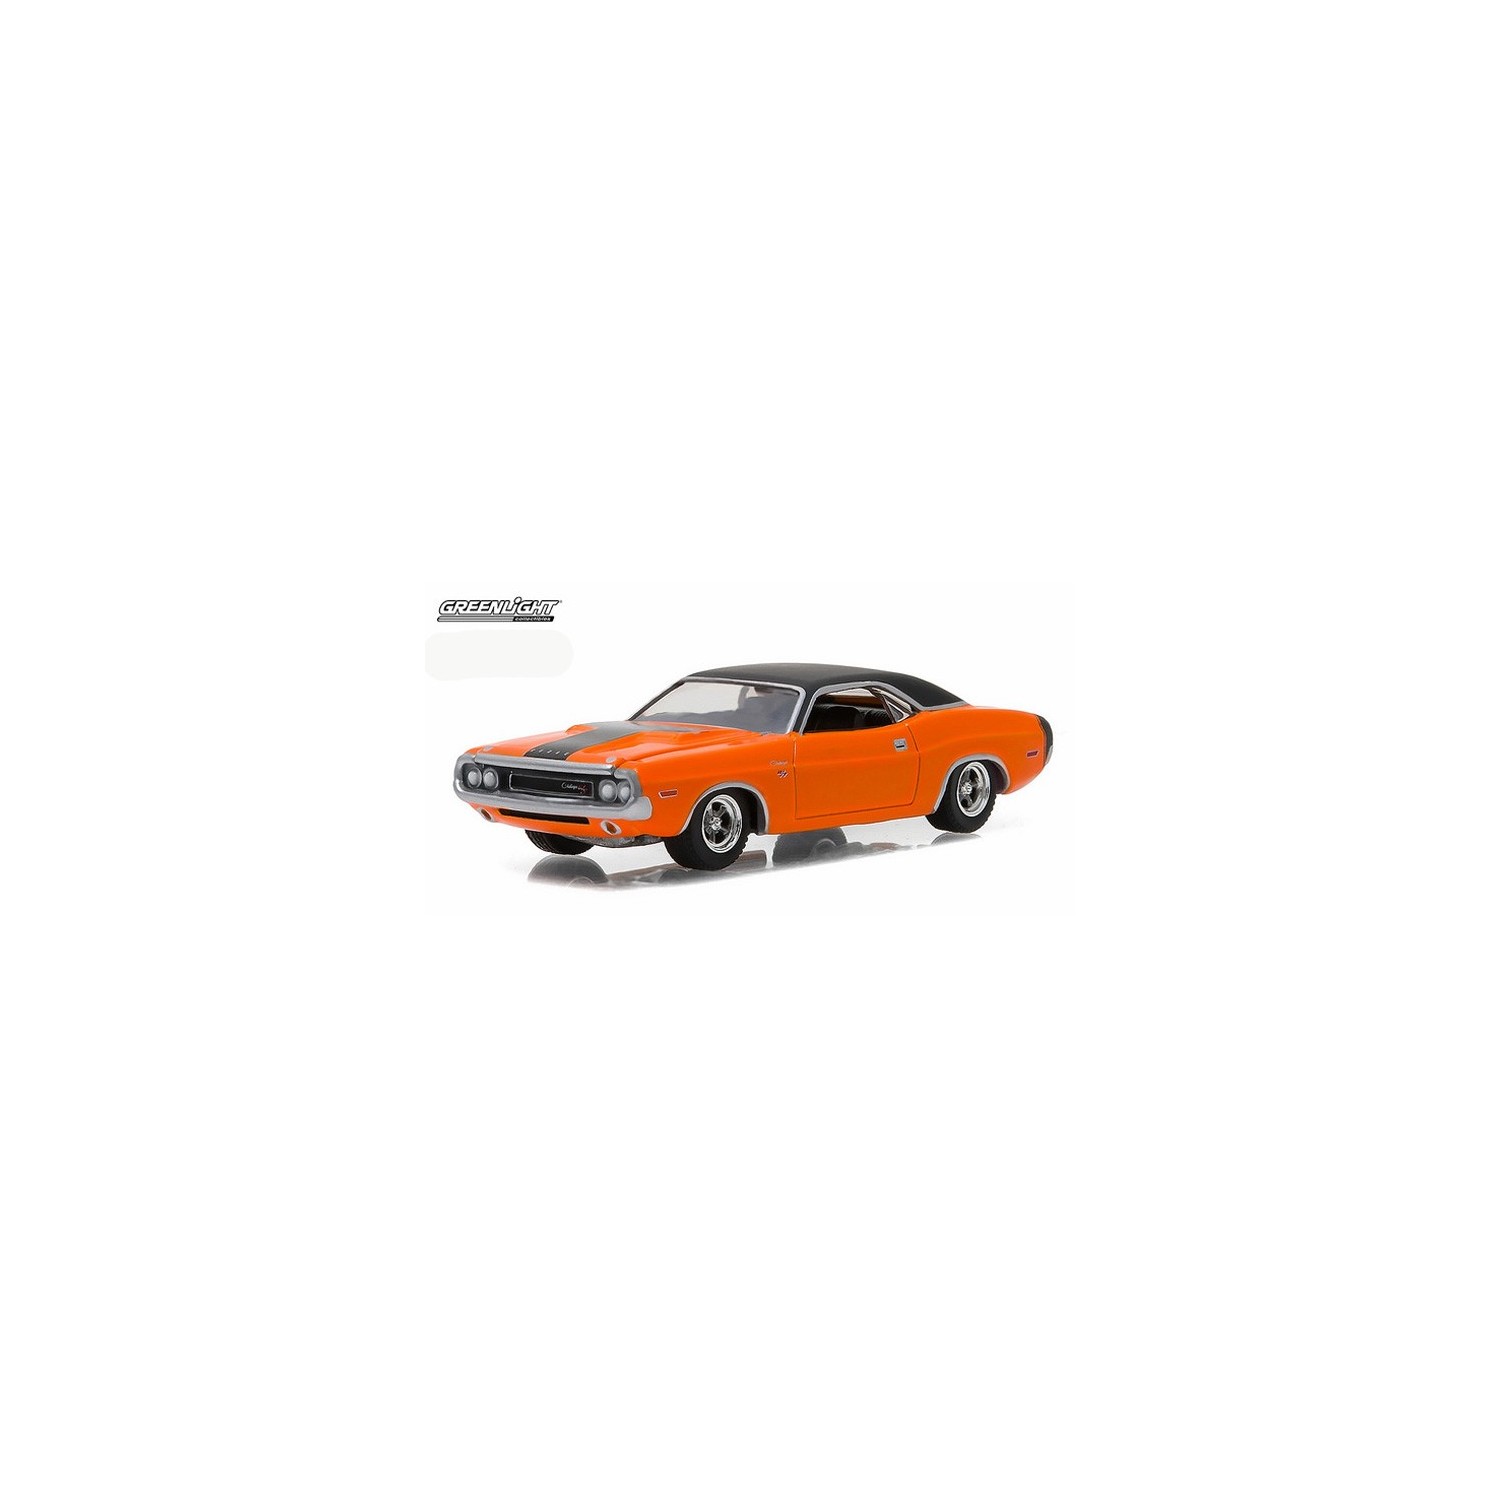 1970 Dodge Challenger R/T HEMI Mango Orange Barrett Jackson Scottsdale Edition Series 3 1/64 Diecast Model Car by Greenlight 37160 E Lot #1330